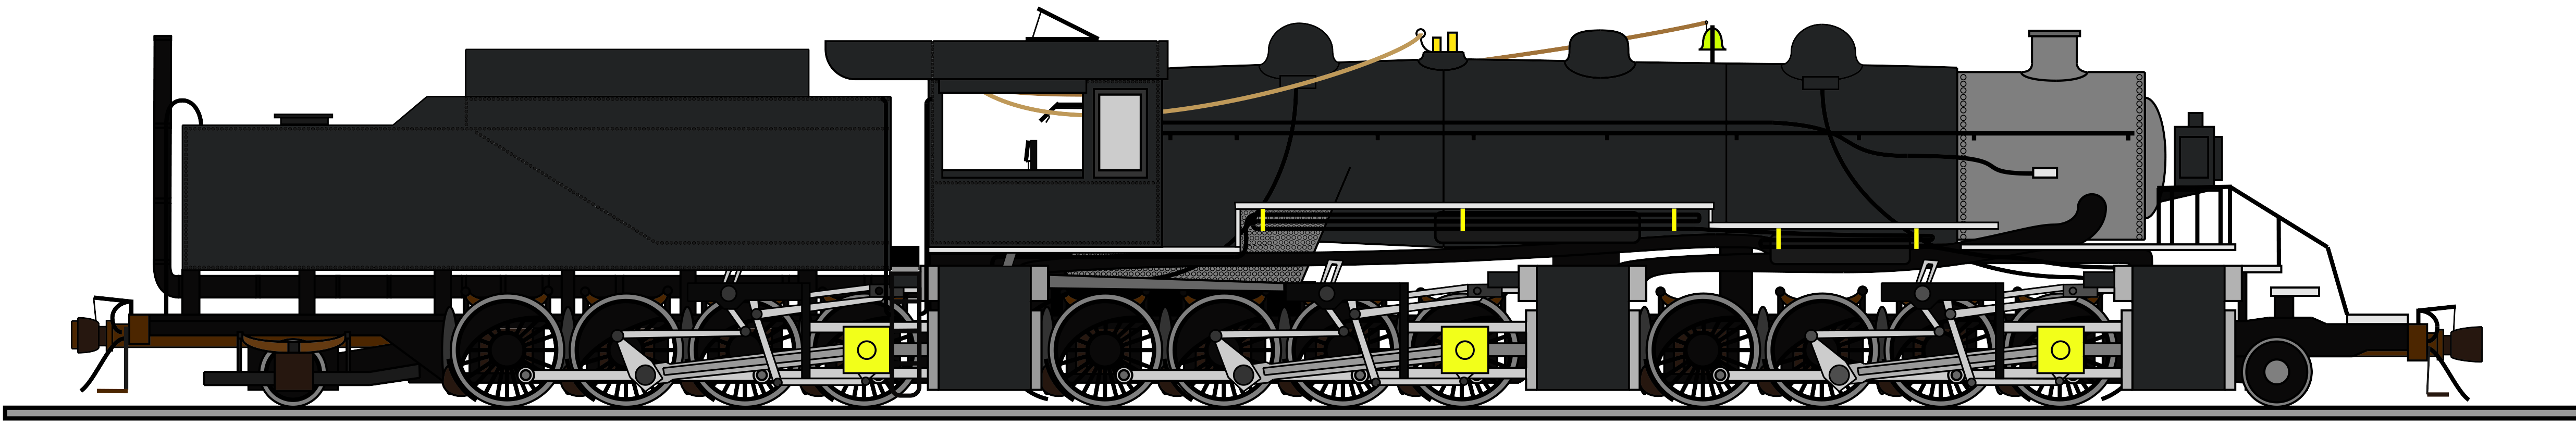 Yae triplex. Паровоз Triplex MTH Erie 2-8-8-8-2. Паровоз 2-6-1. Паровой Локомотив Болдуин 2 8 0. Triplex Steam locomotive.